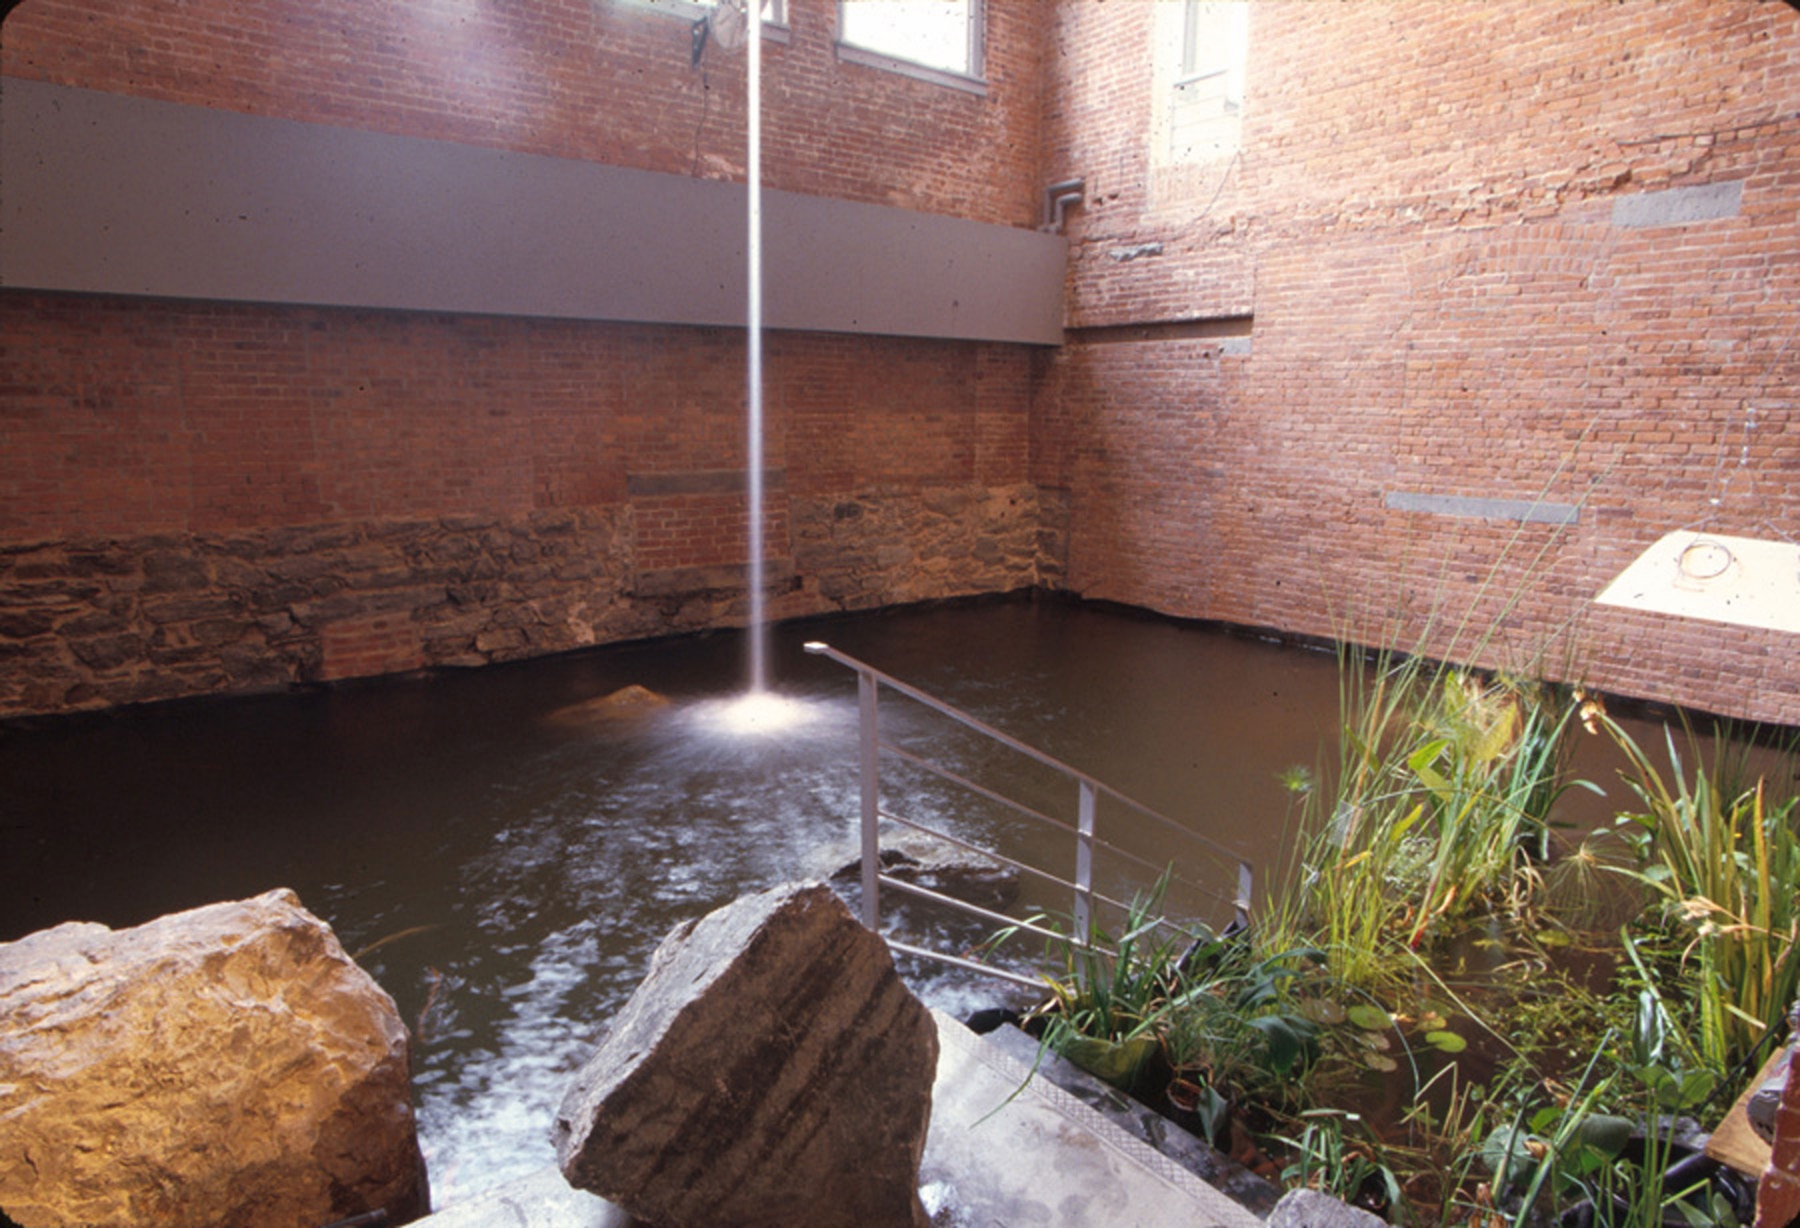 &nbsp; &nbsp;Pool, P.S. 1 Contemporary Art Center, Long Island City, New York, 1998.&nbsp; &nbsp; &nbsp;